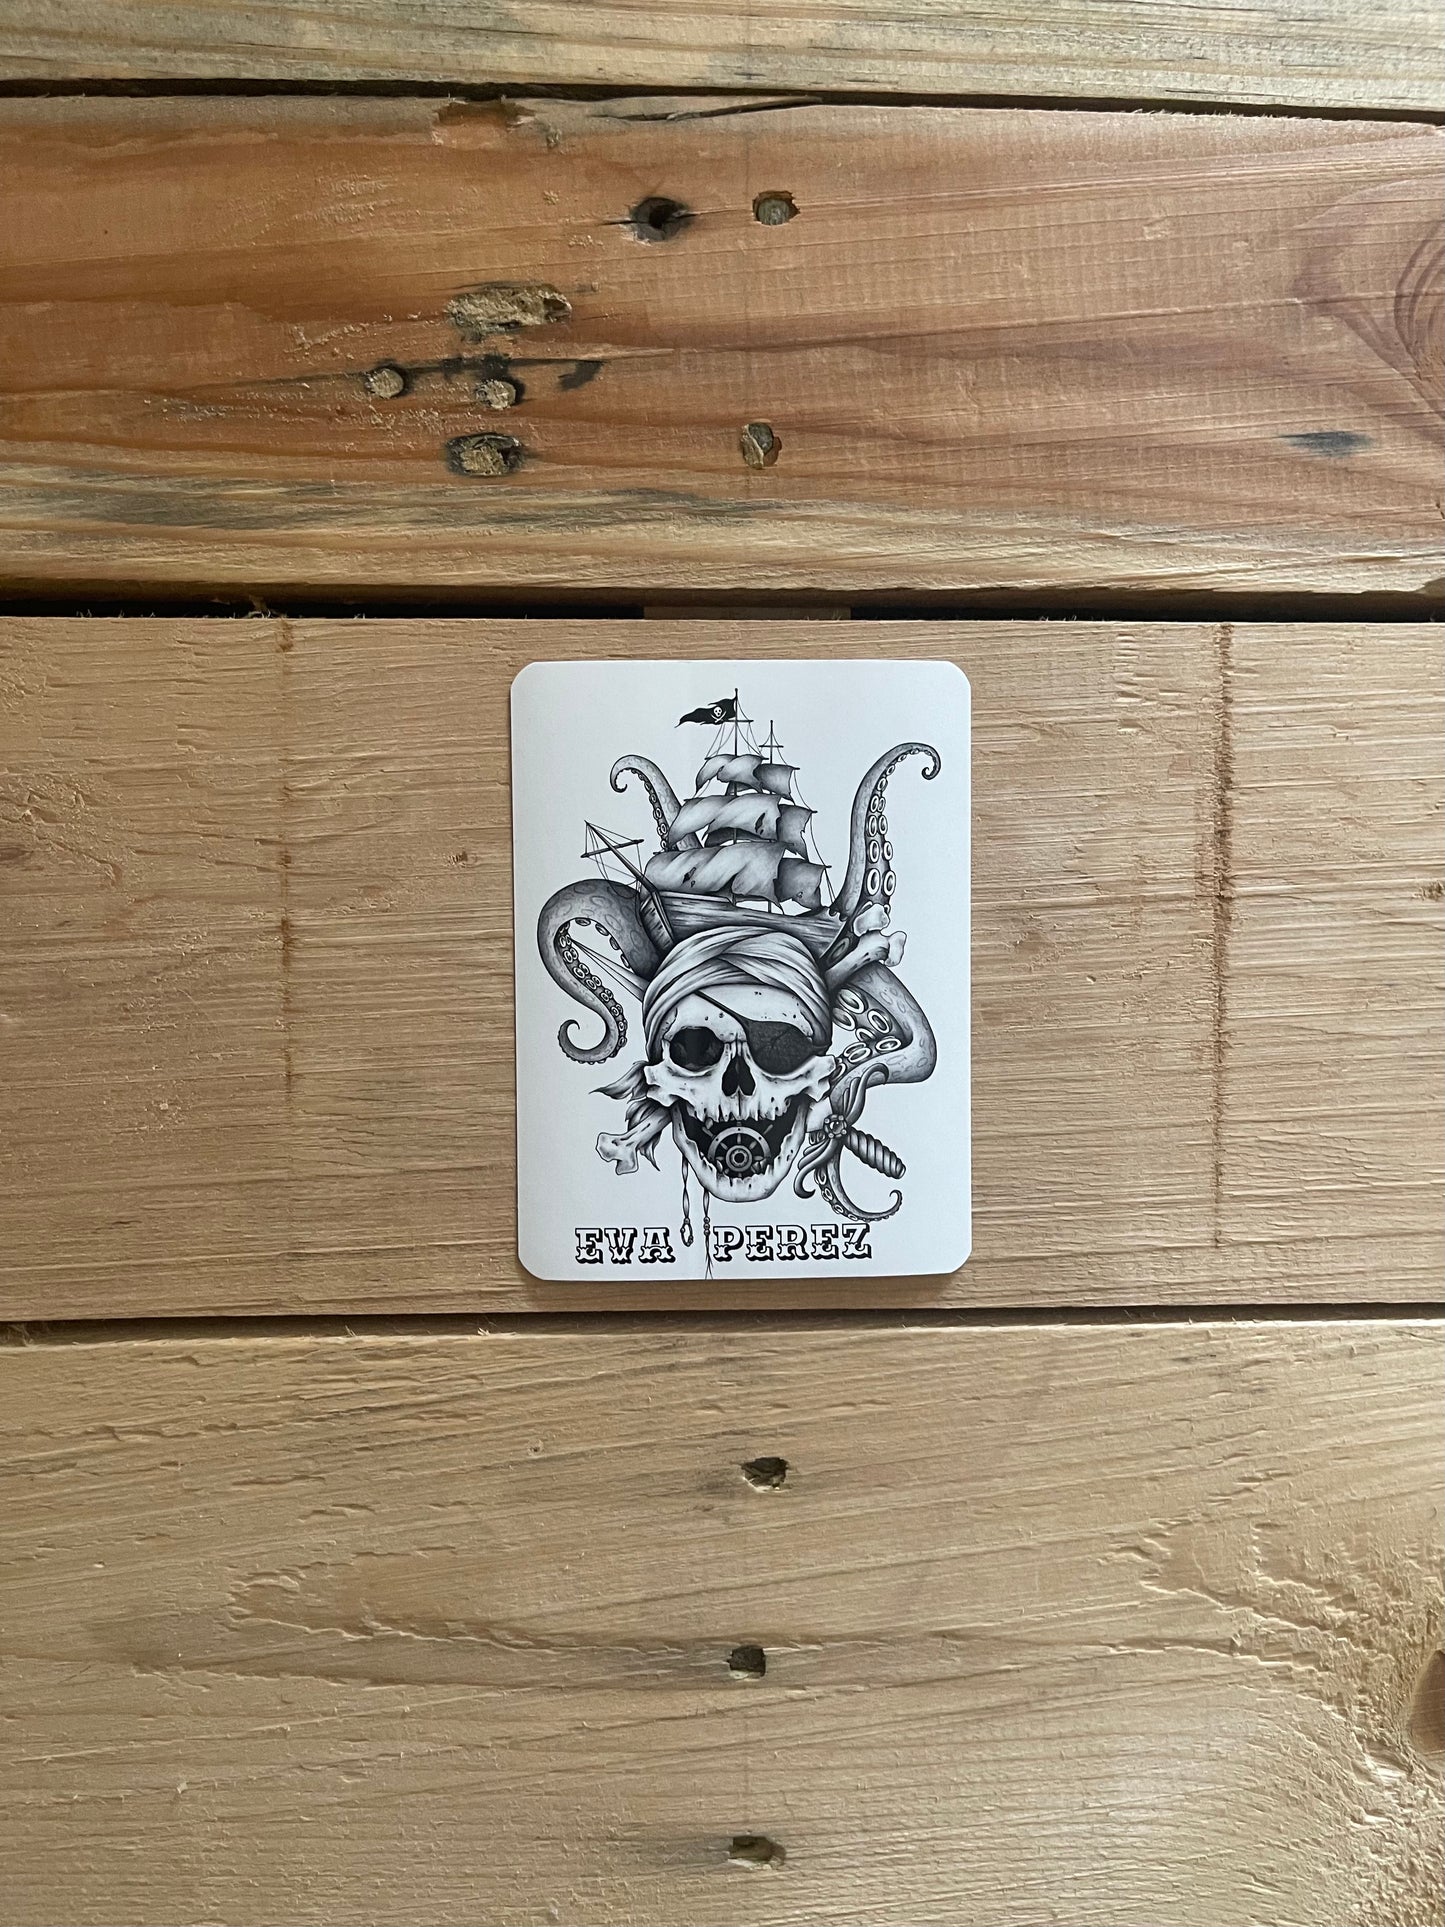 Pirate Skull Sticker